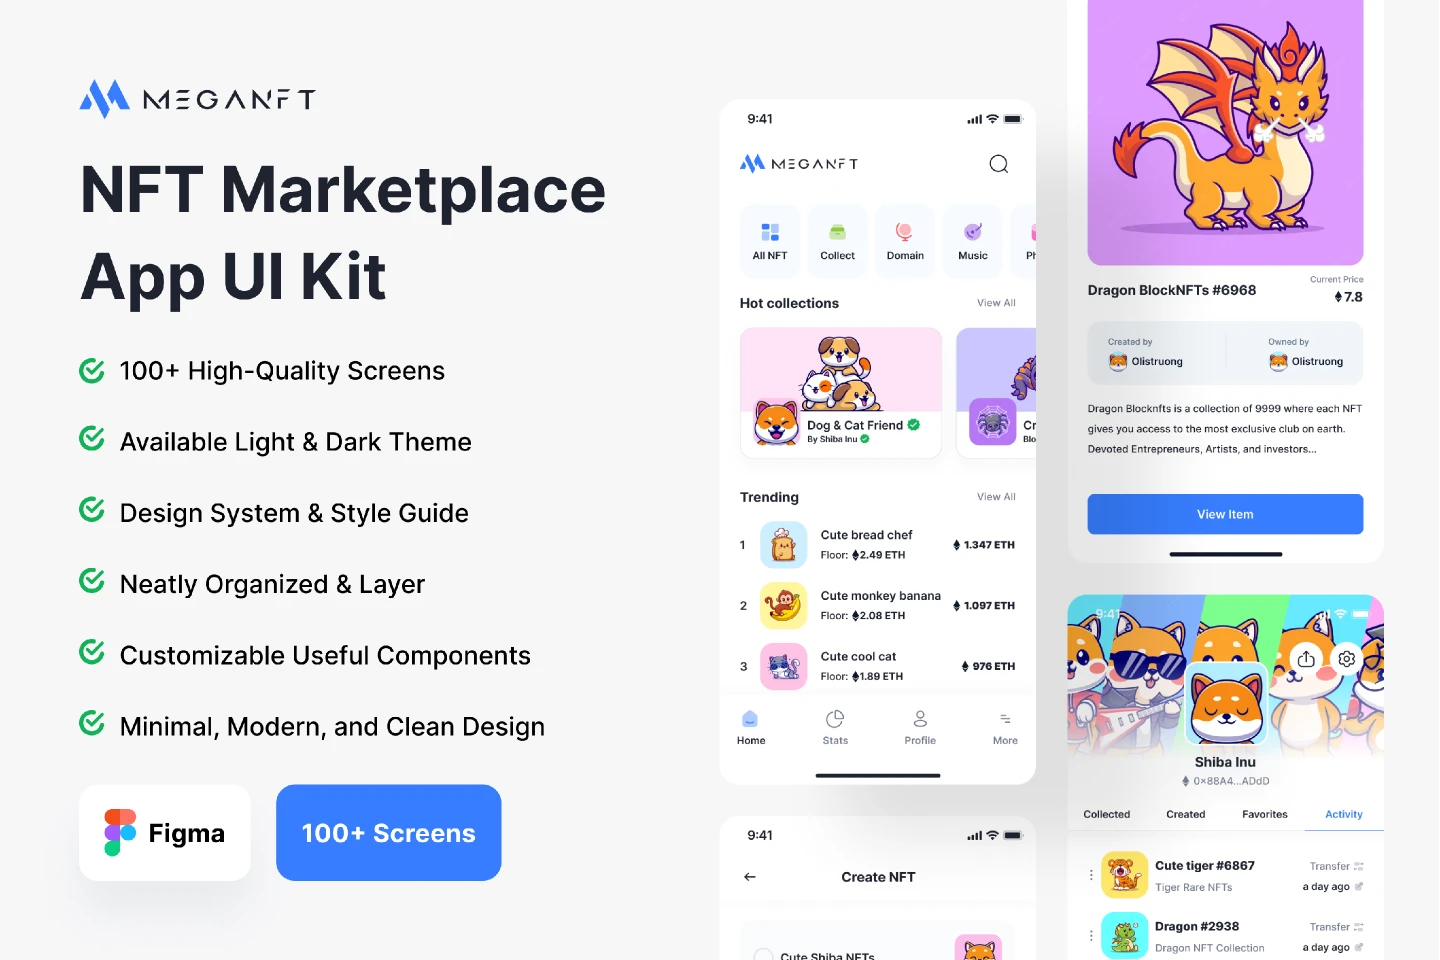 MEGANFT - NFT Marketplace App UI Kit for Figma and Adobe XD